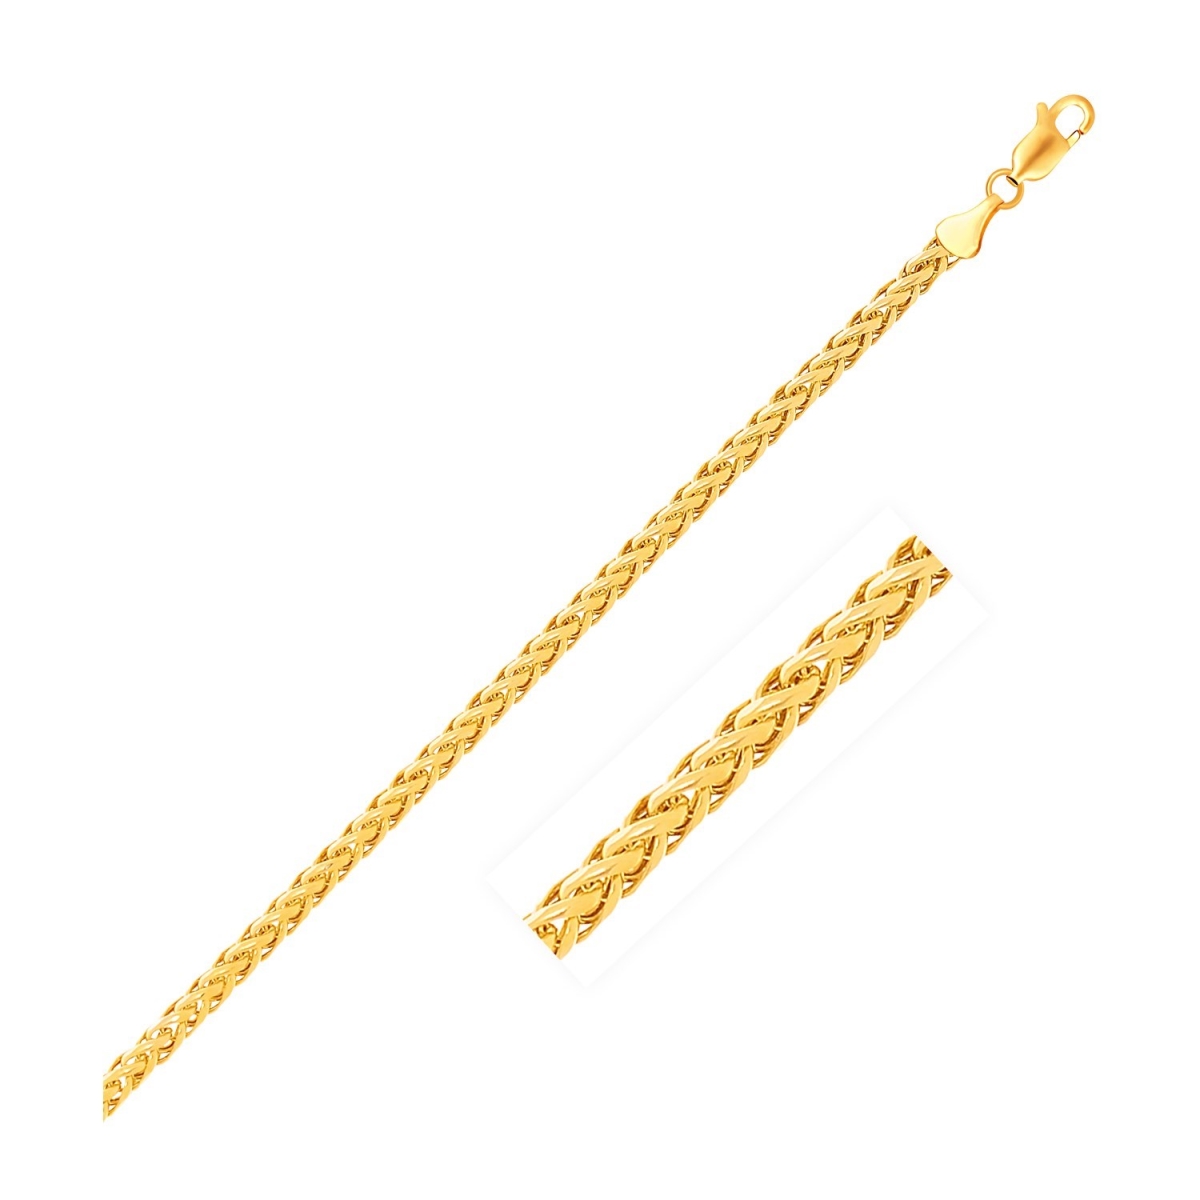 4.1 Mm 14k Yellow Gold Diamond Cut Round Franco Bracelet - Size 8 In.